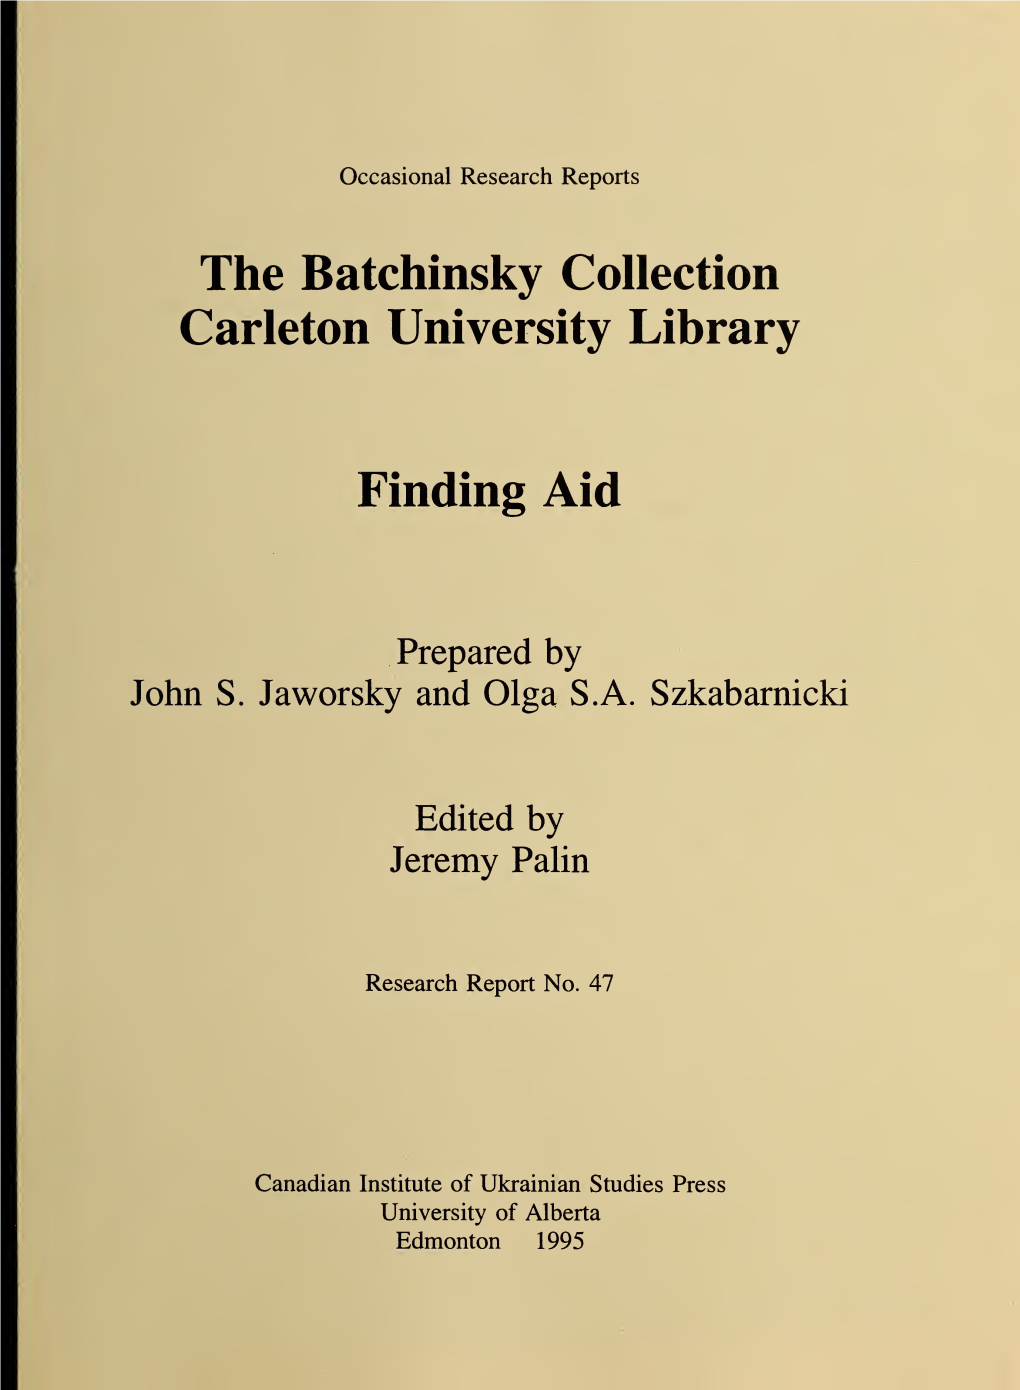 The Batchinsky Collection Carleton University Library